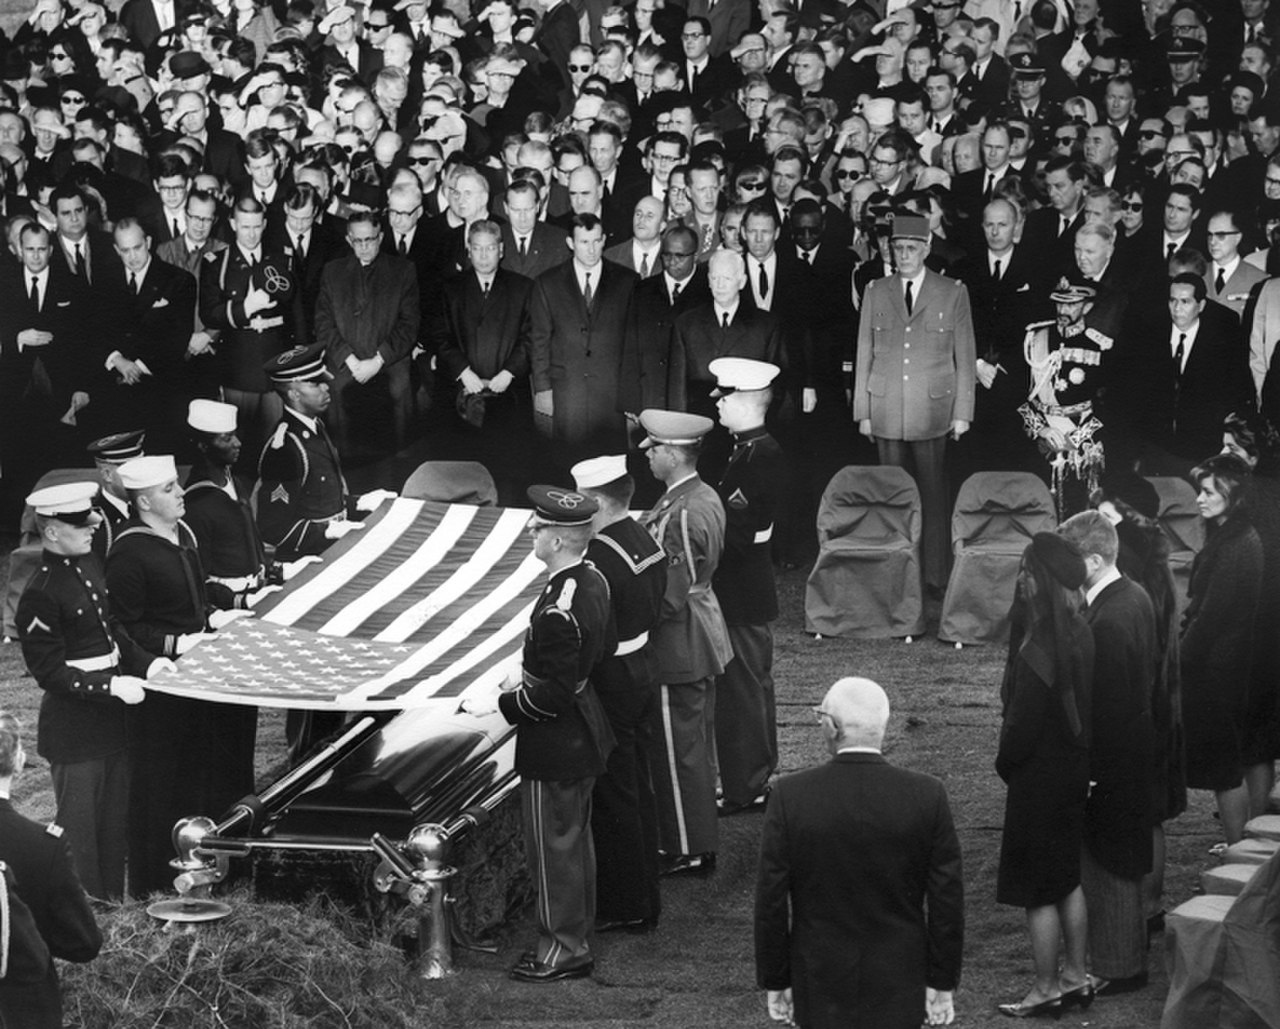 24 Kennedy Assassination Photos Reveal One Of America's Darkest Days